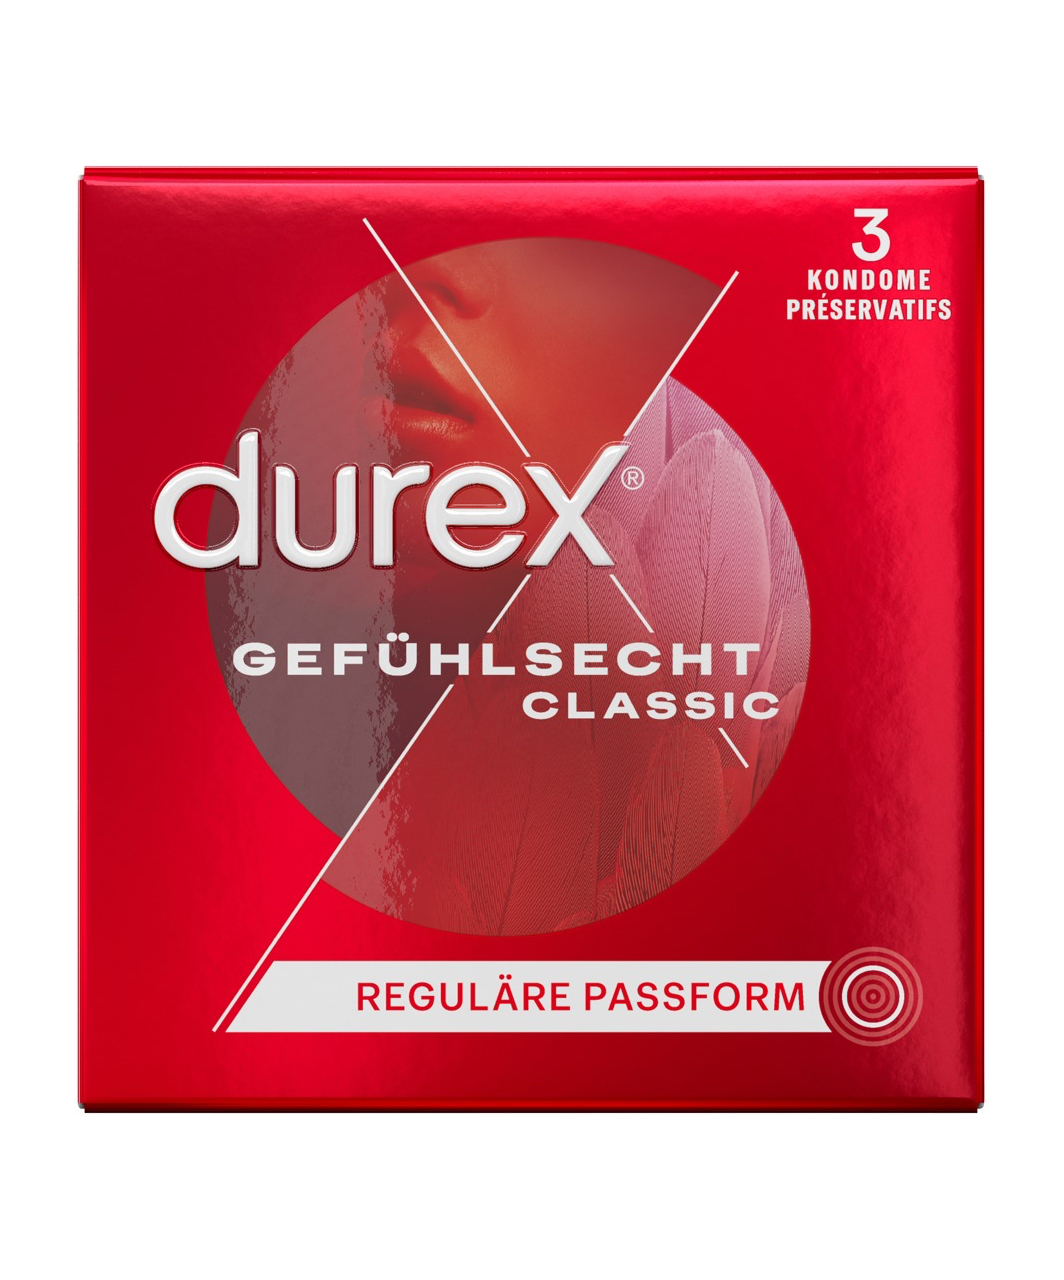 Durex Sensitive condoms (3 / 20 pcs)